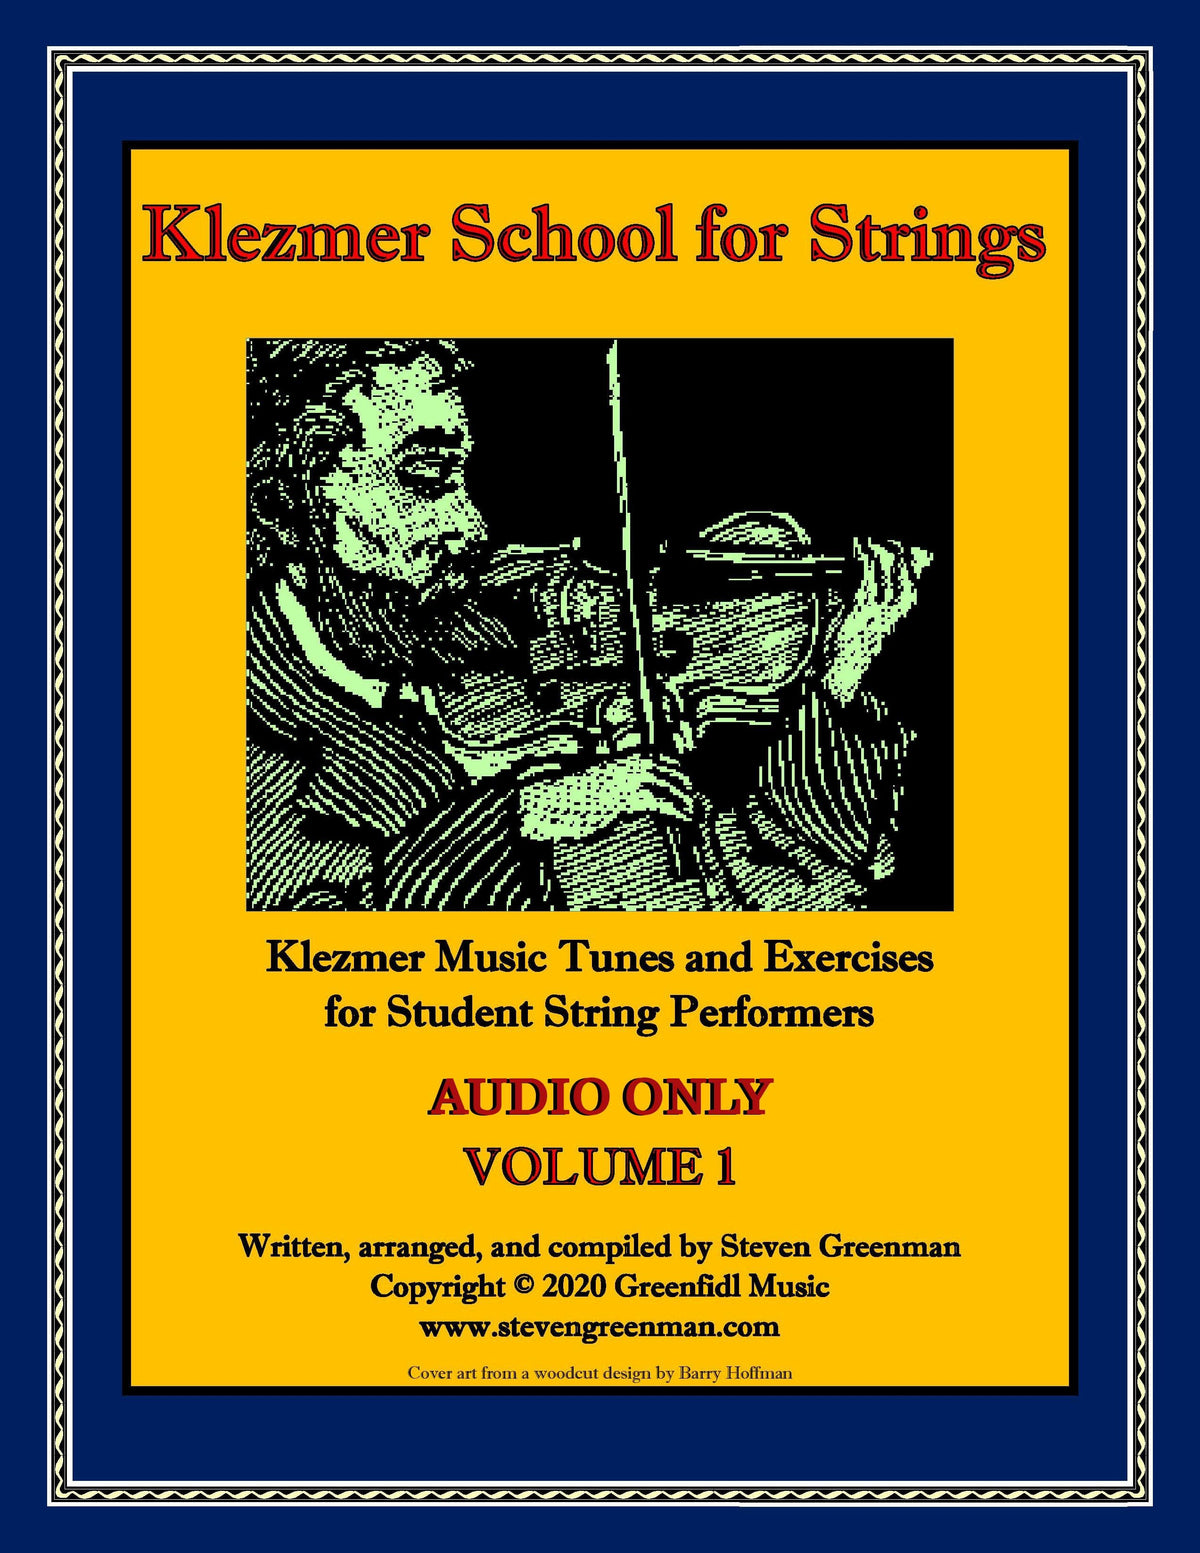 Greenman, Steven - Klezmer School for Strings Volume 1 - Violin Audio